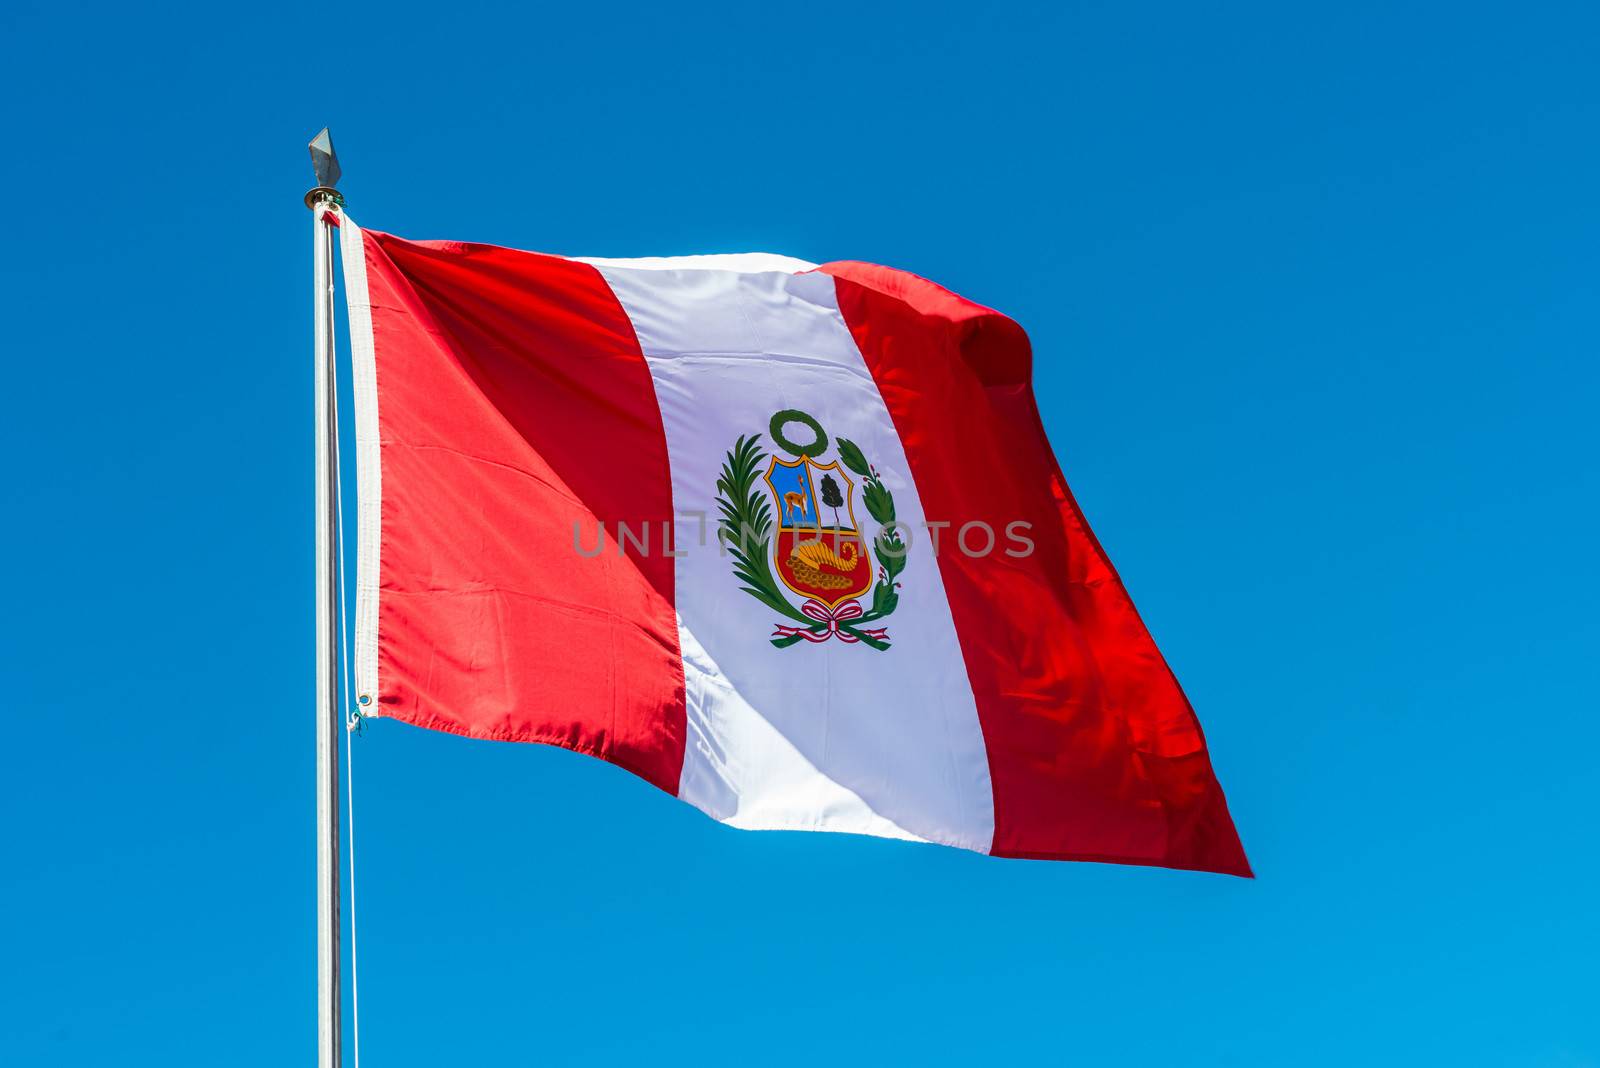 Peruvian Flag in the peruvian Andes at Puno Peru by PIXSTILL